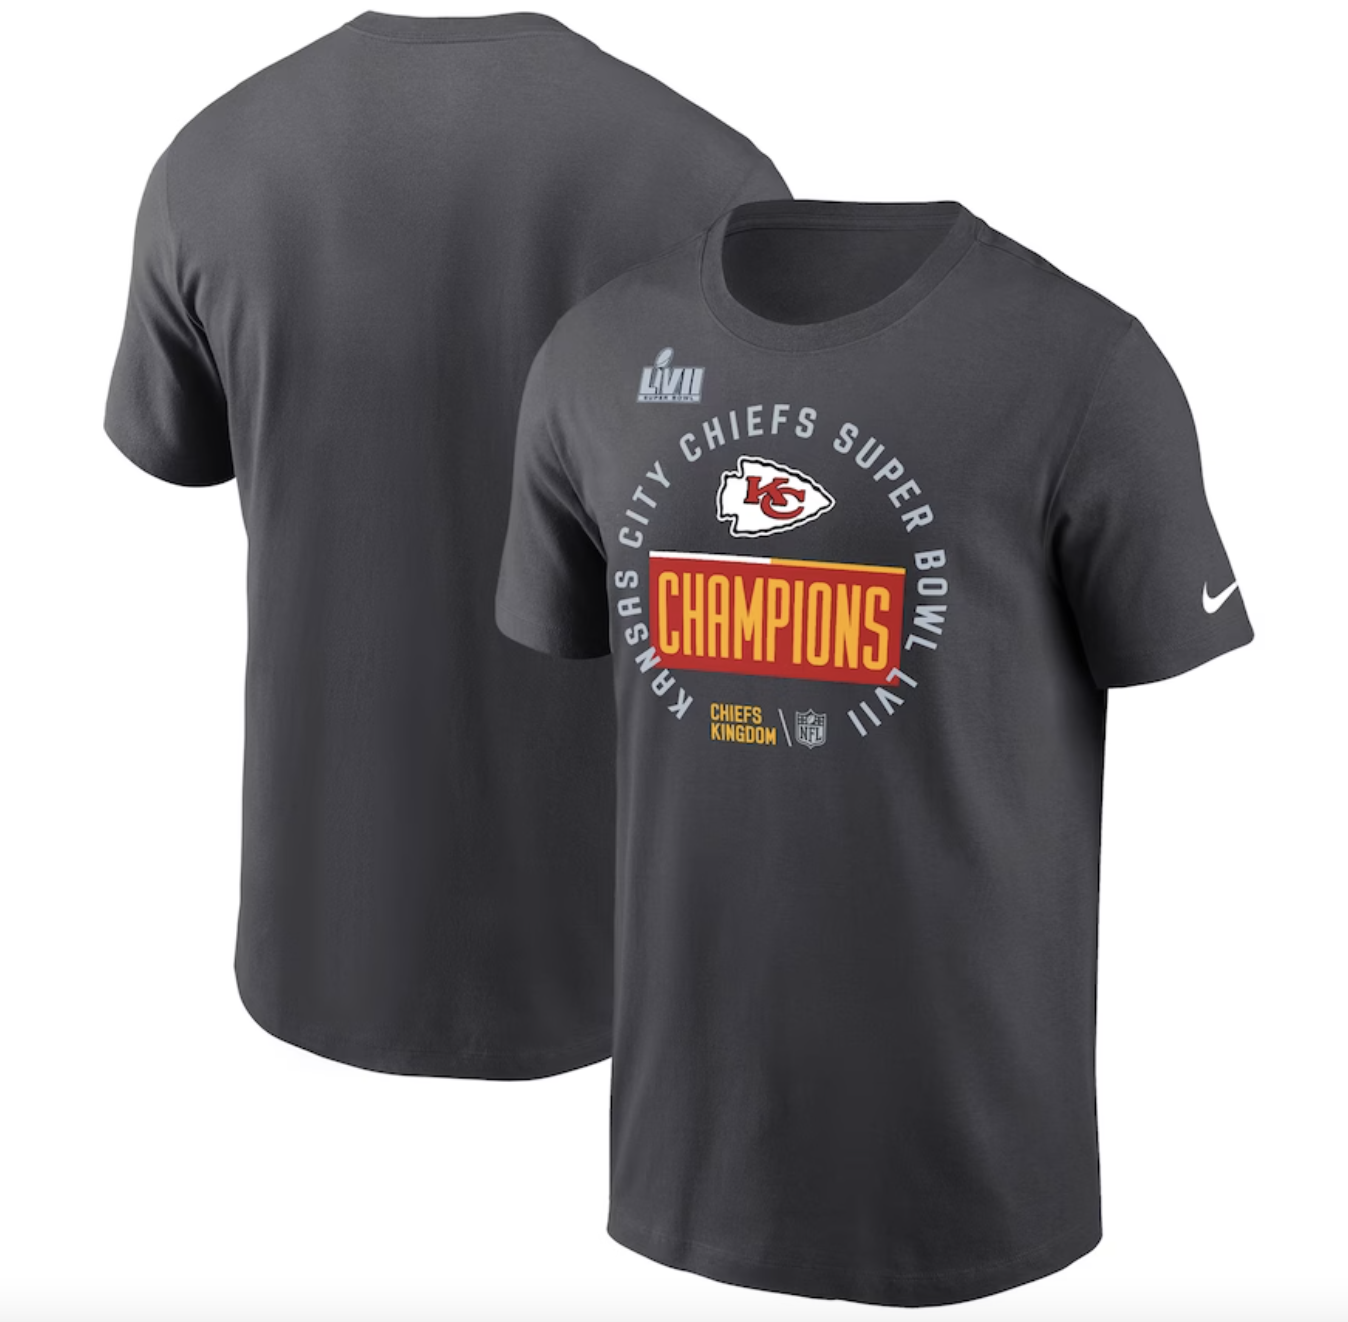 Where to buy Kansas City Chiefs 2023 Super Bowl Champions gear